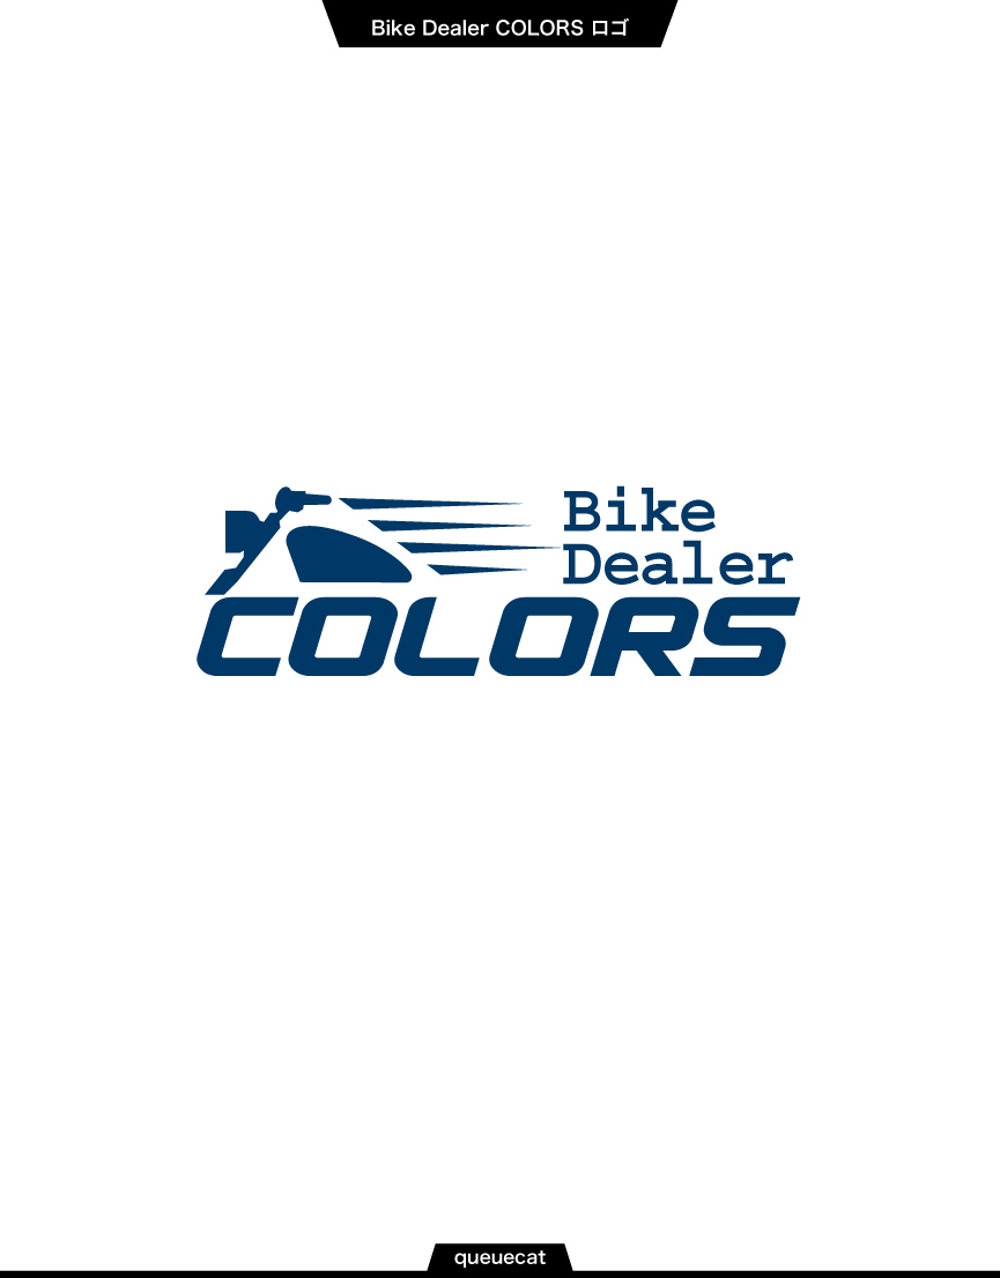 Bike Dealer COLORS2_1.jpg